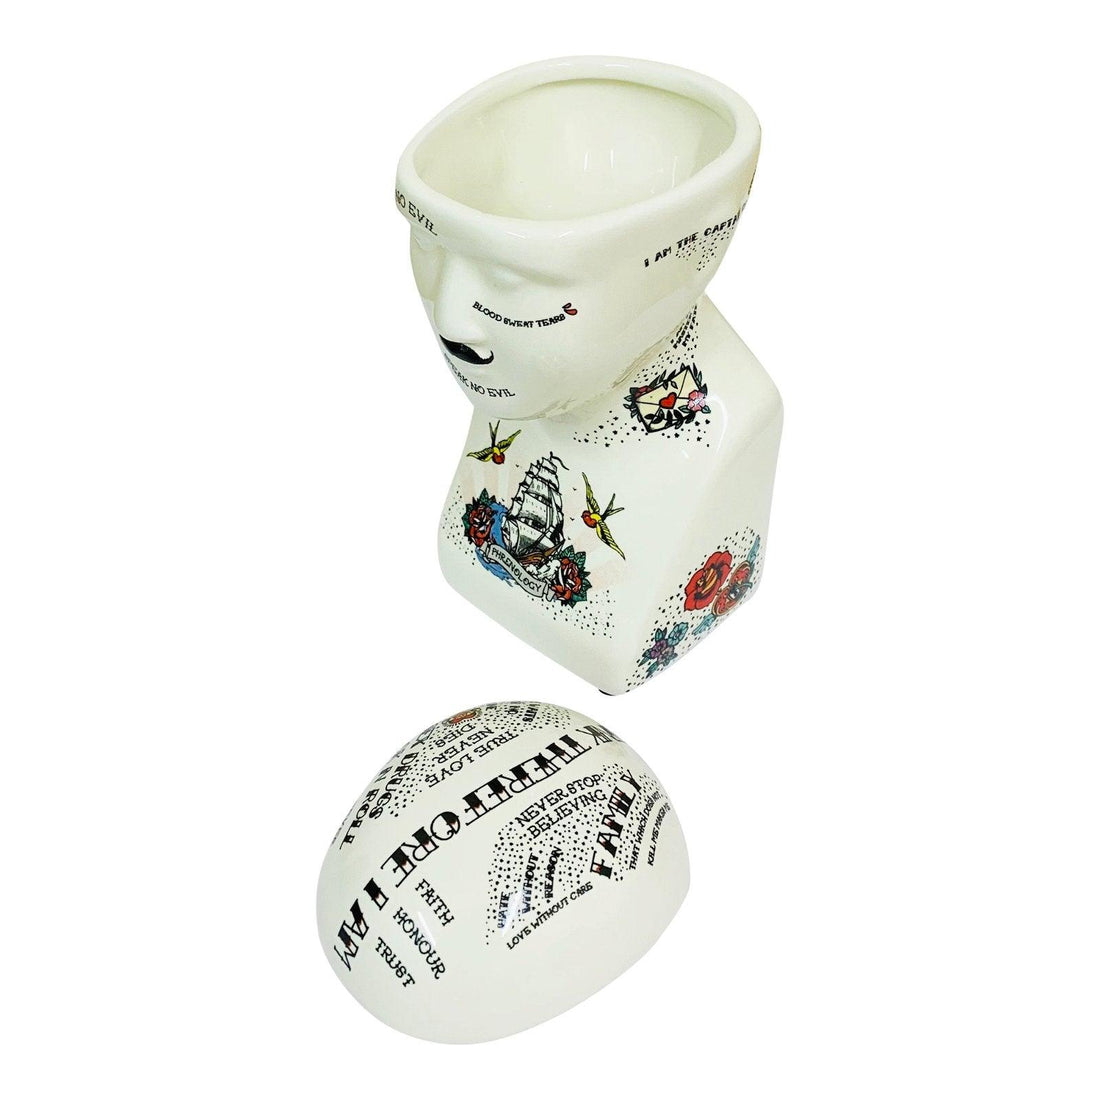 Ceramic Phrenology Head Storage Small - £20.99 - Phrenology 